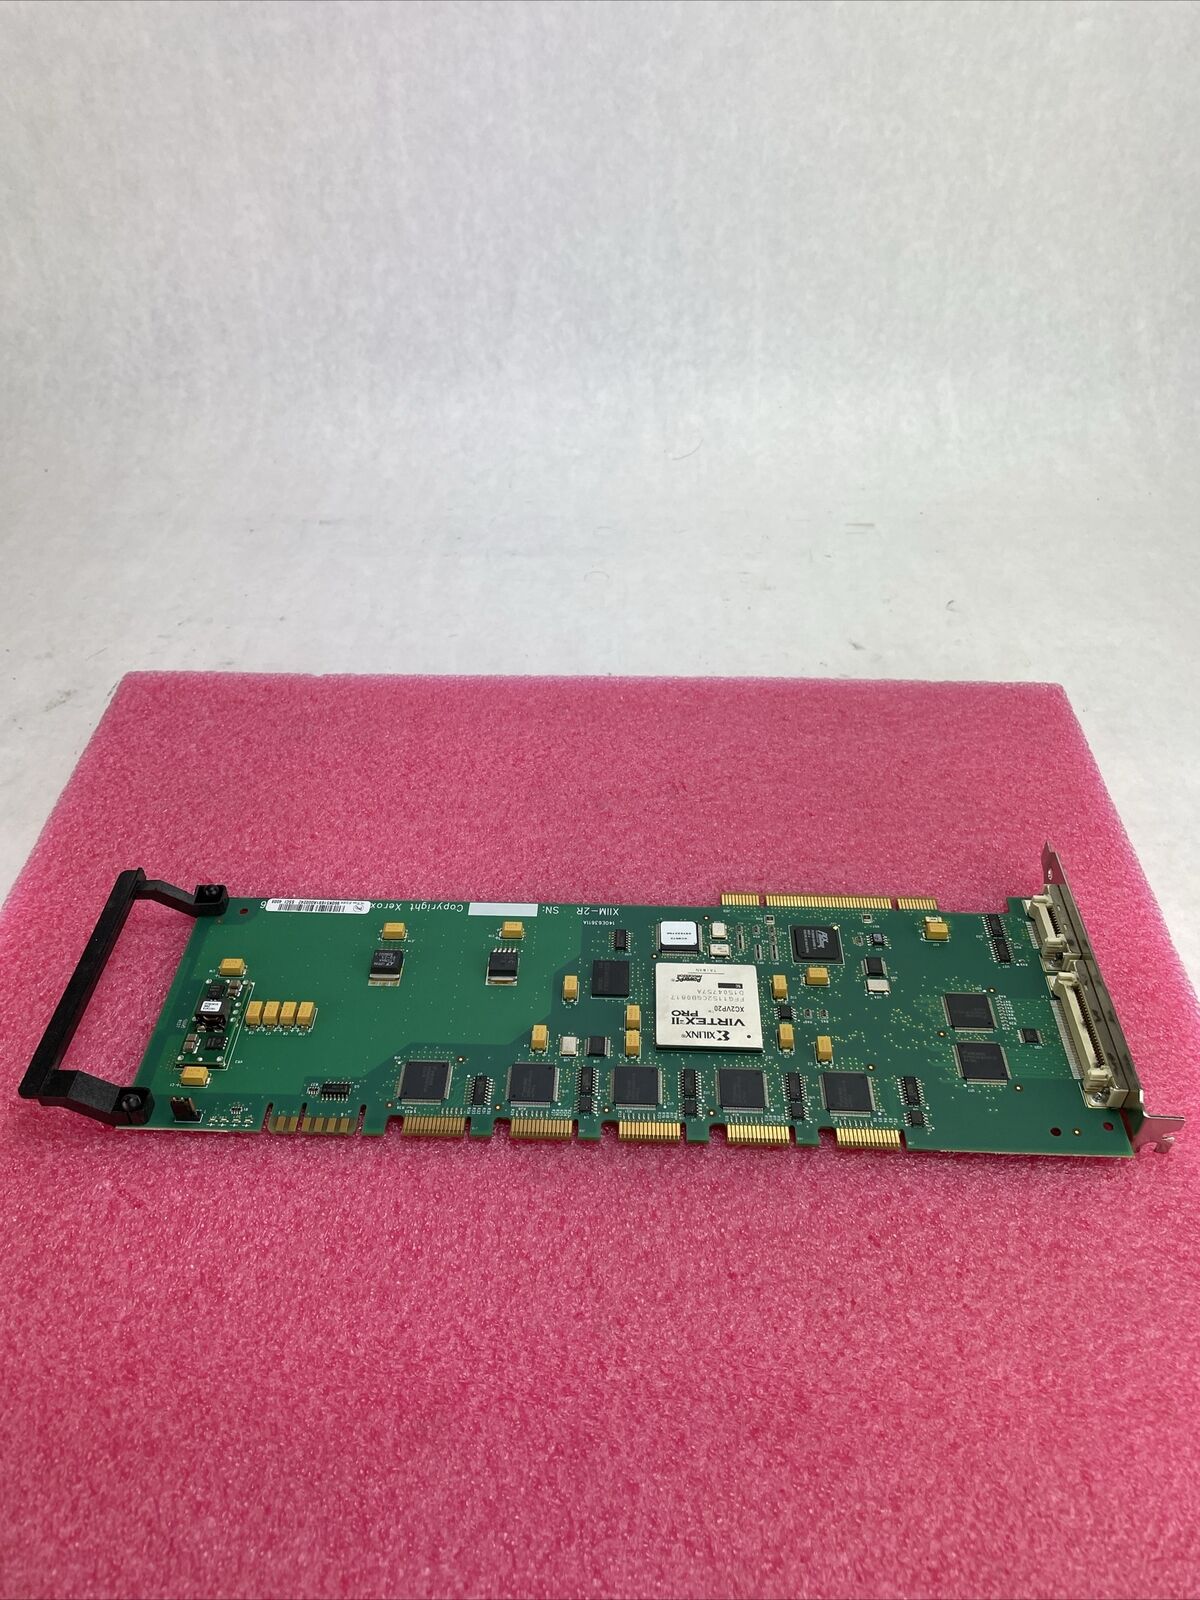 XIIM-2R 32933A PCI Interface Controller